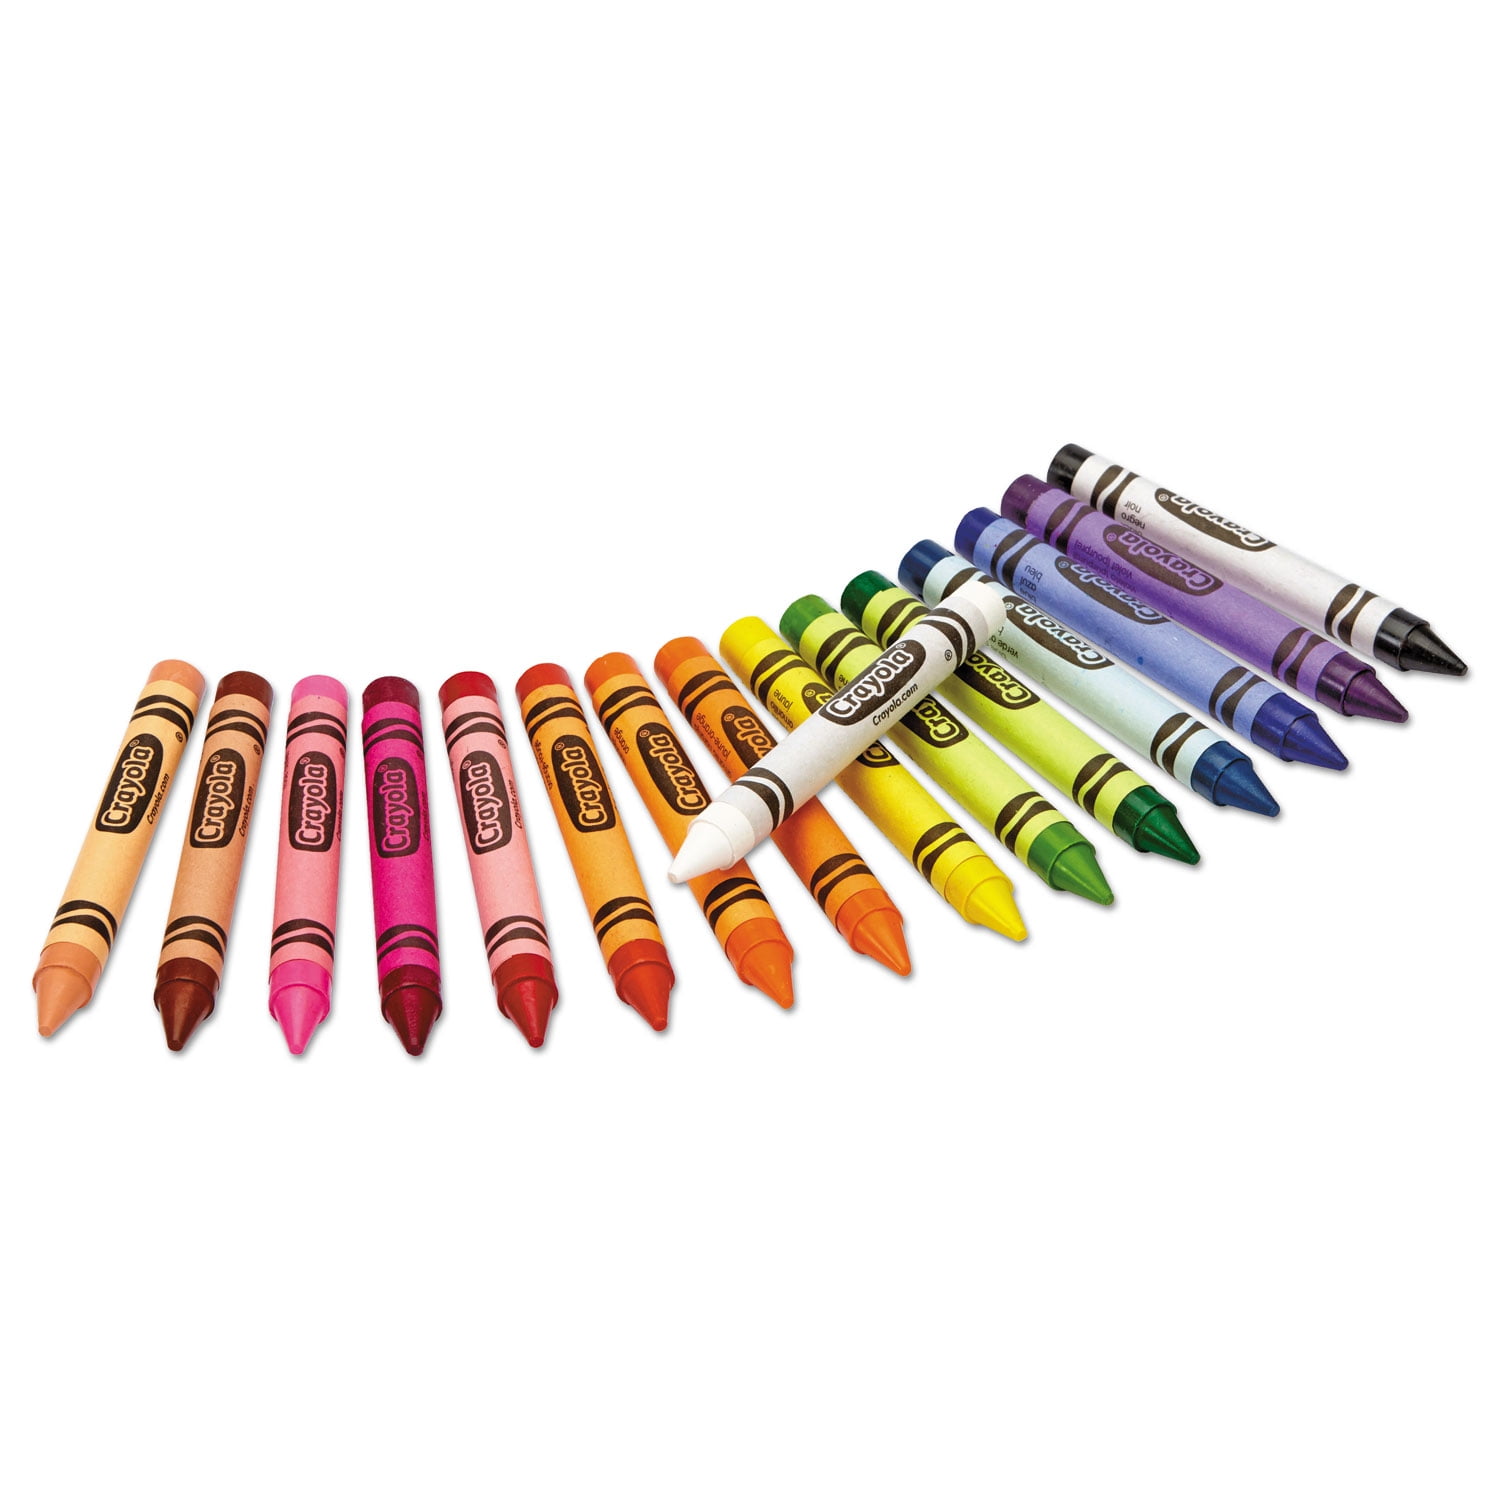 Crayola Large Crayons, Lift Lid Box, 16 Colors/Box 520336, 1 - Dillons Food  Stores